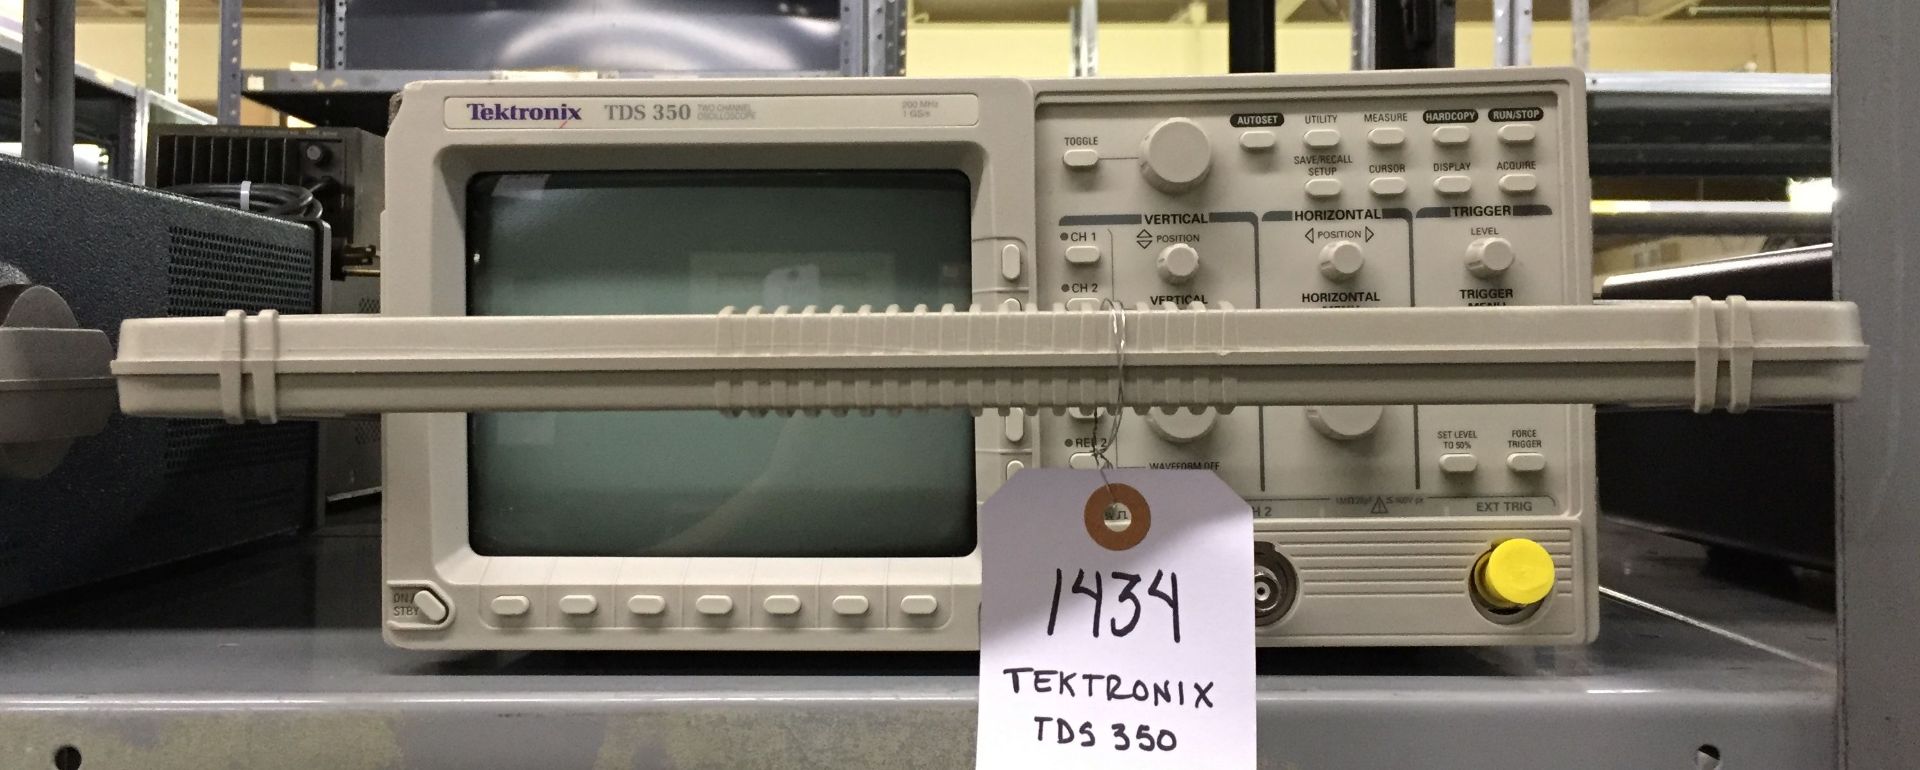 Tektronix TDS350 2CH Oscilloscope